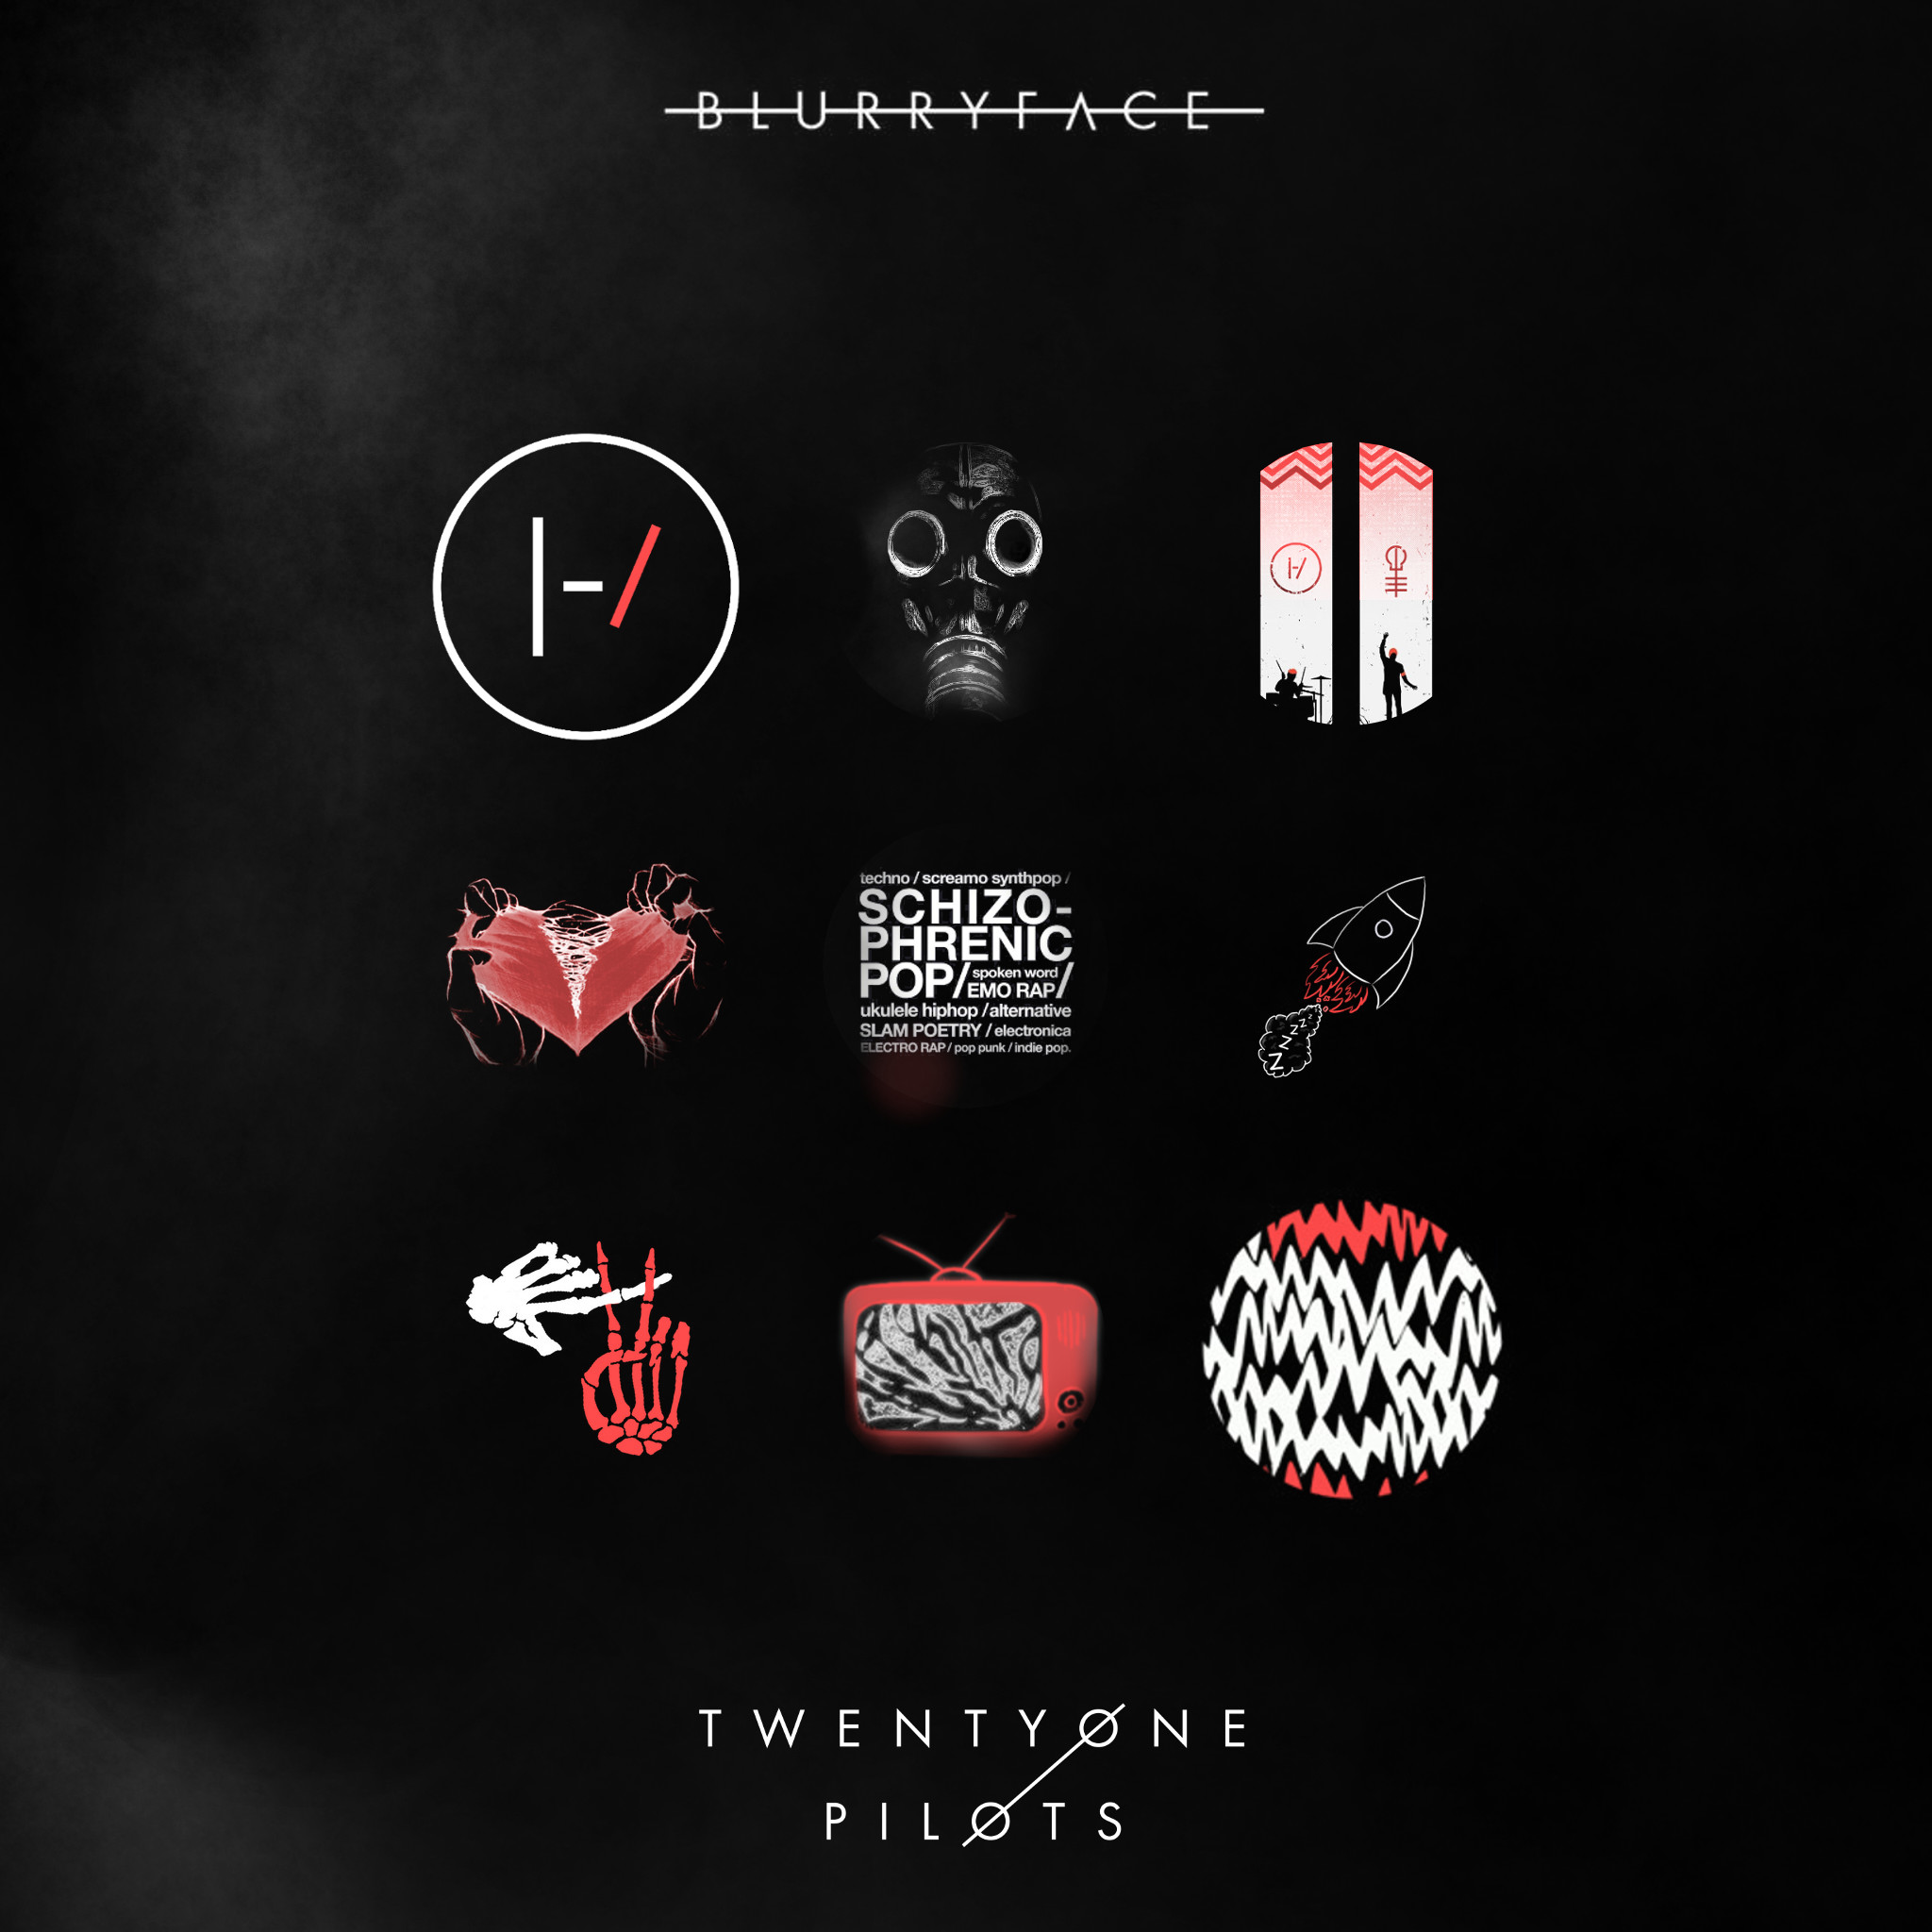 2048x2048 Twenty One Pilots Blurryface Album